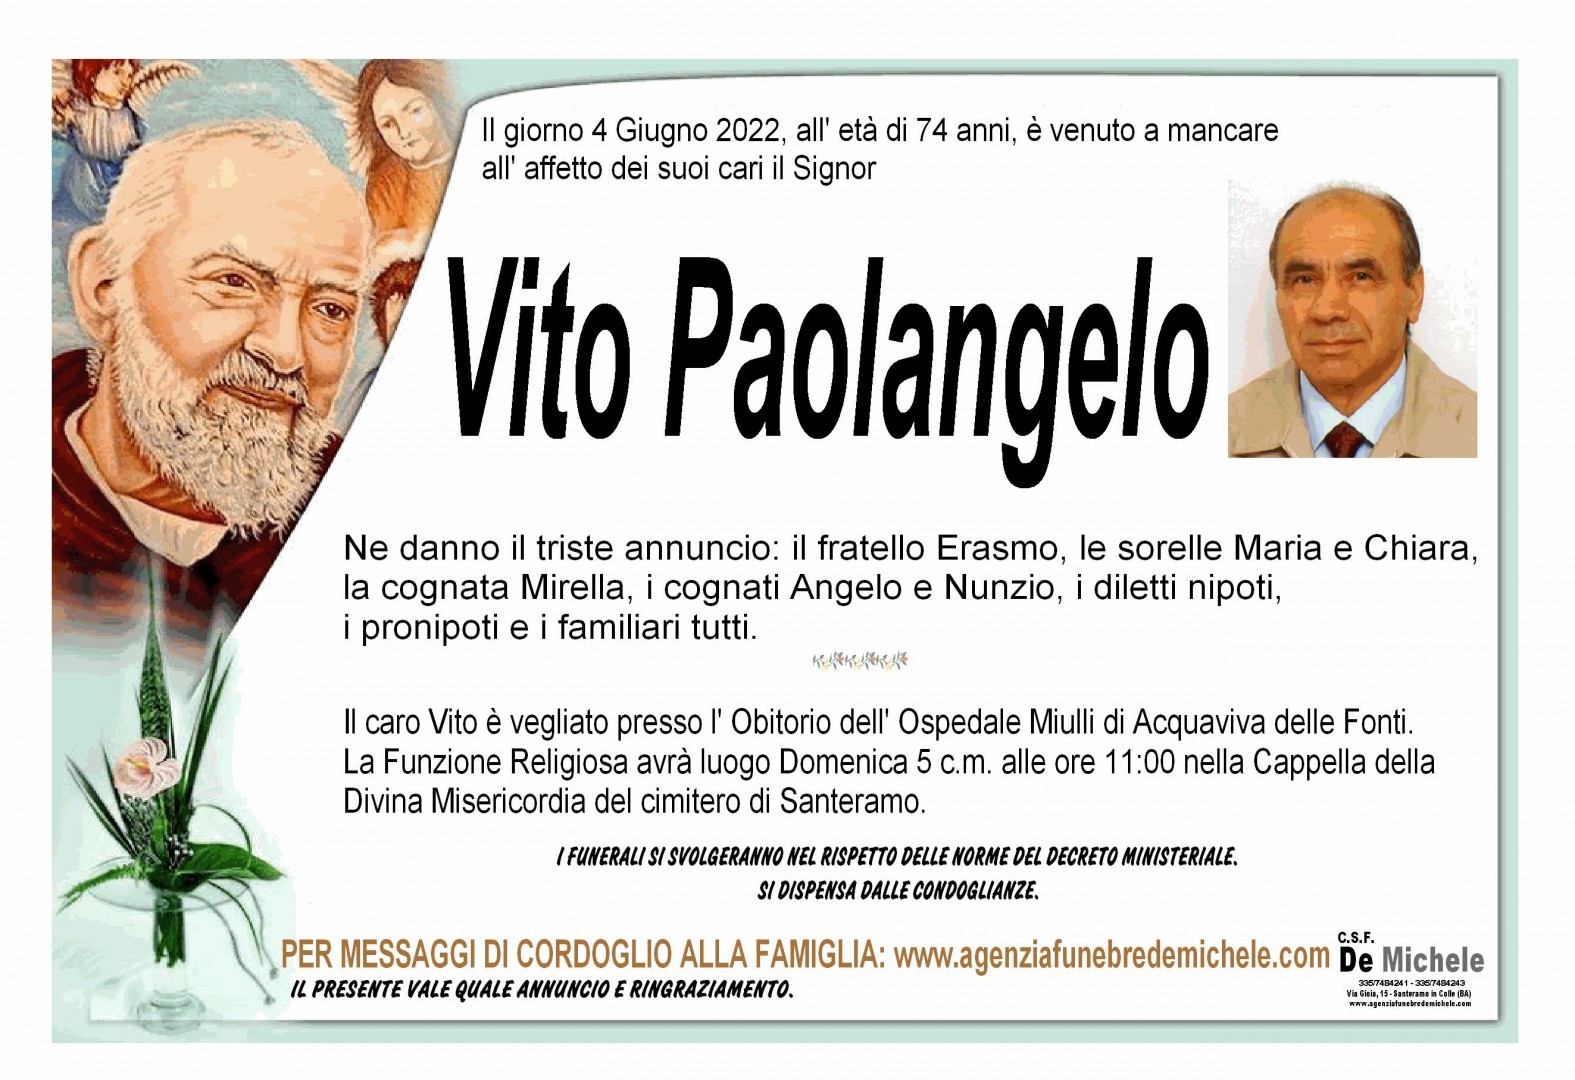 Vito Paolangelo